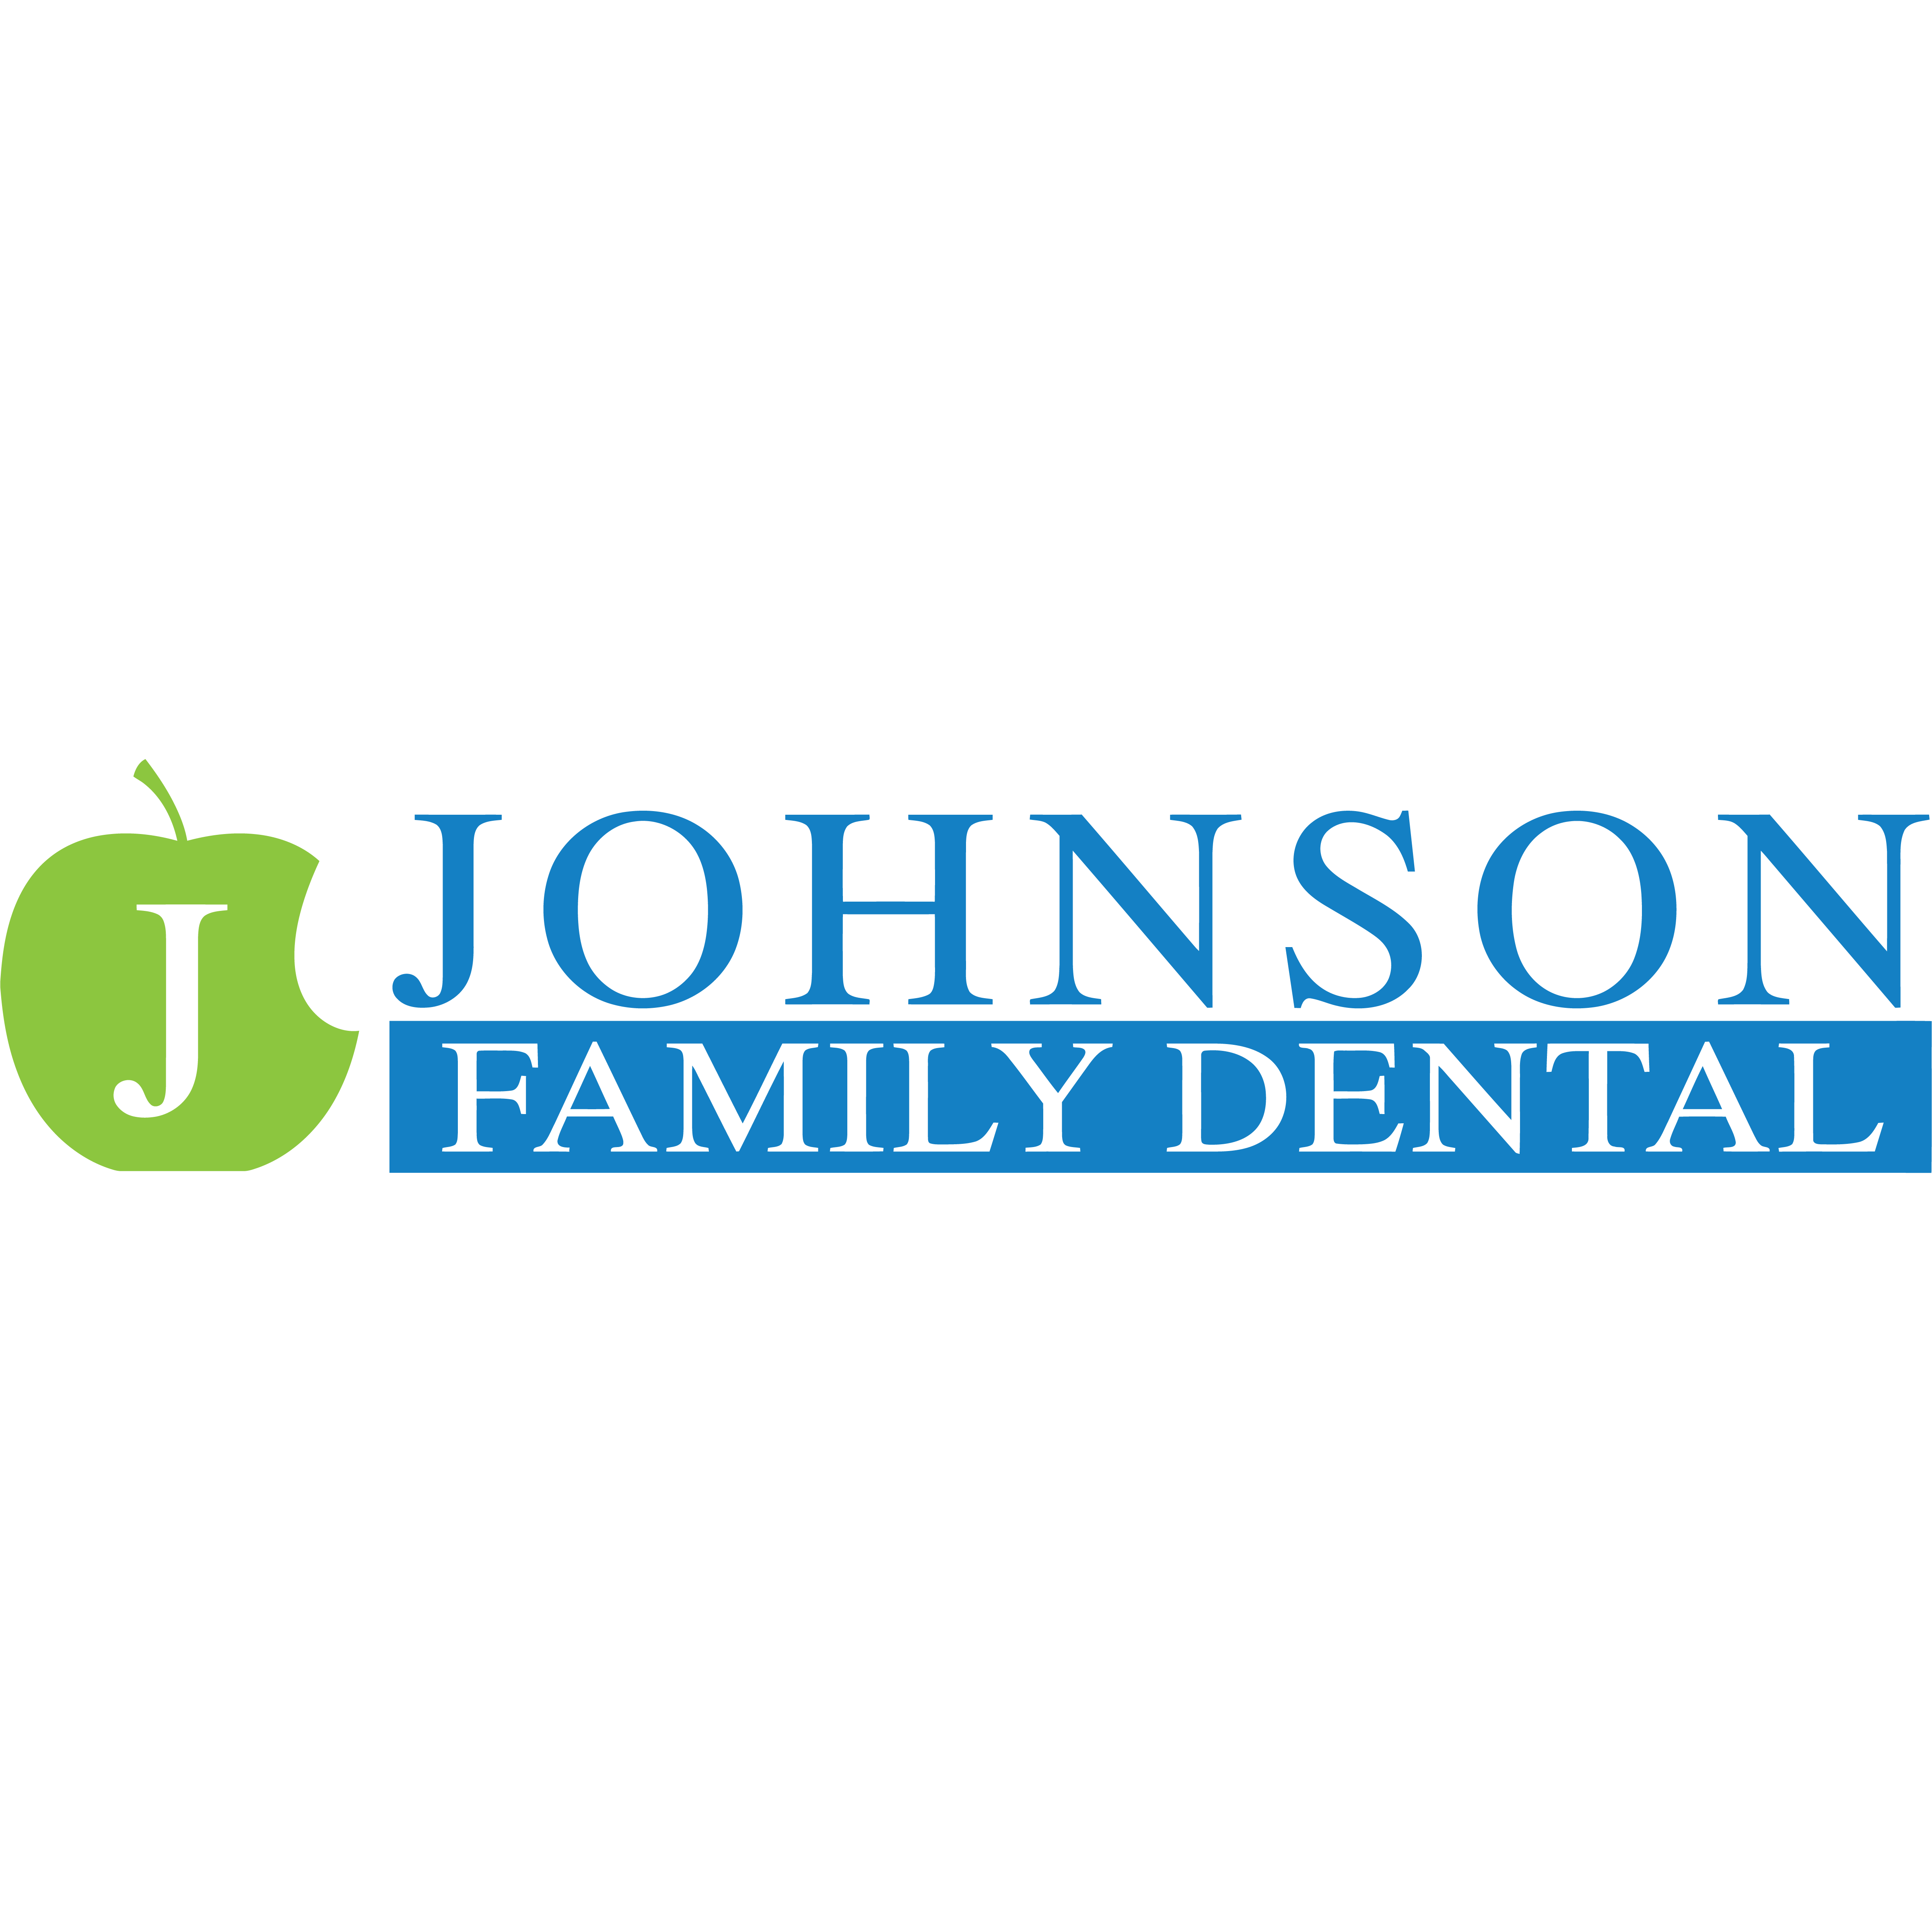 Johnson Family Dental - San Luis Obispo - San Luis Obispo, CA 93405 - (805)543-3747 | ShowMeLocal.com